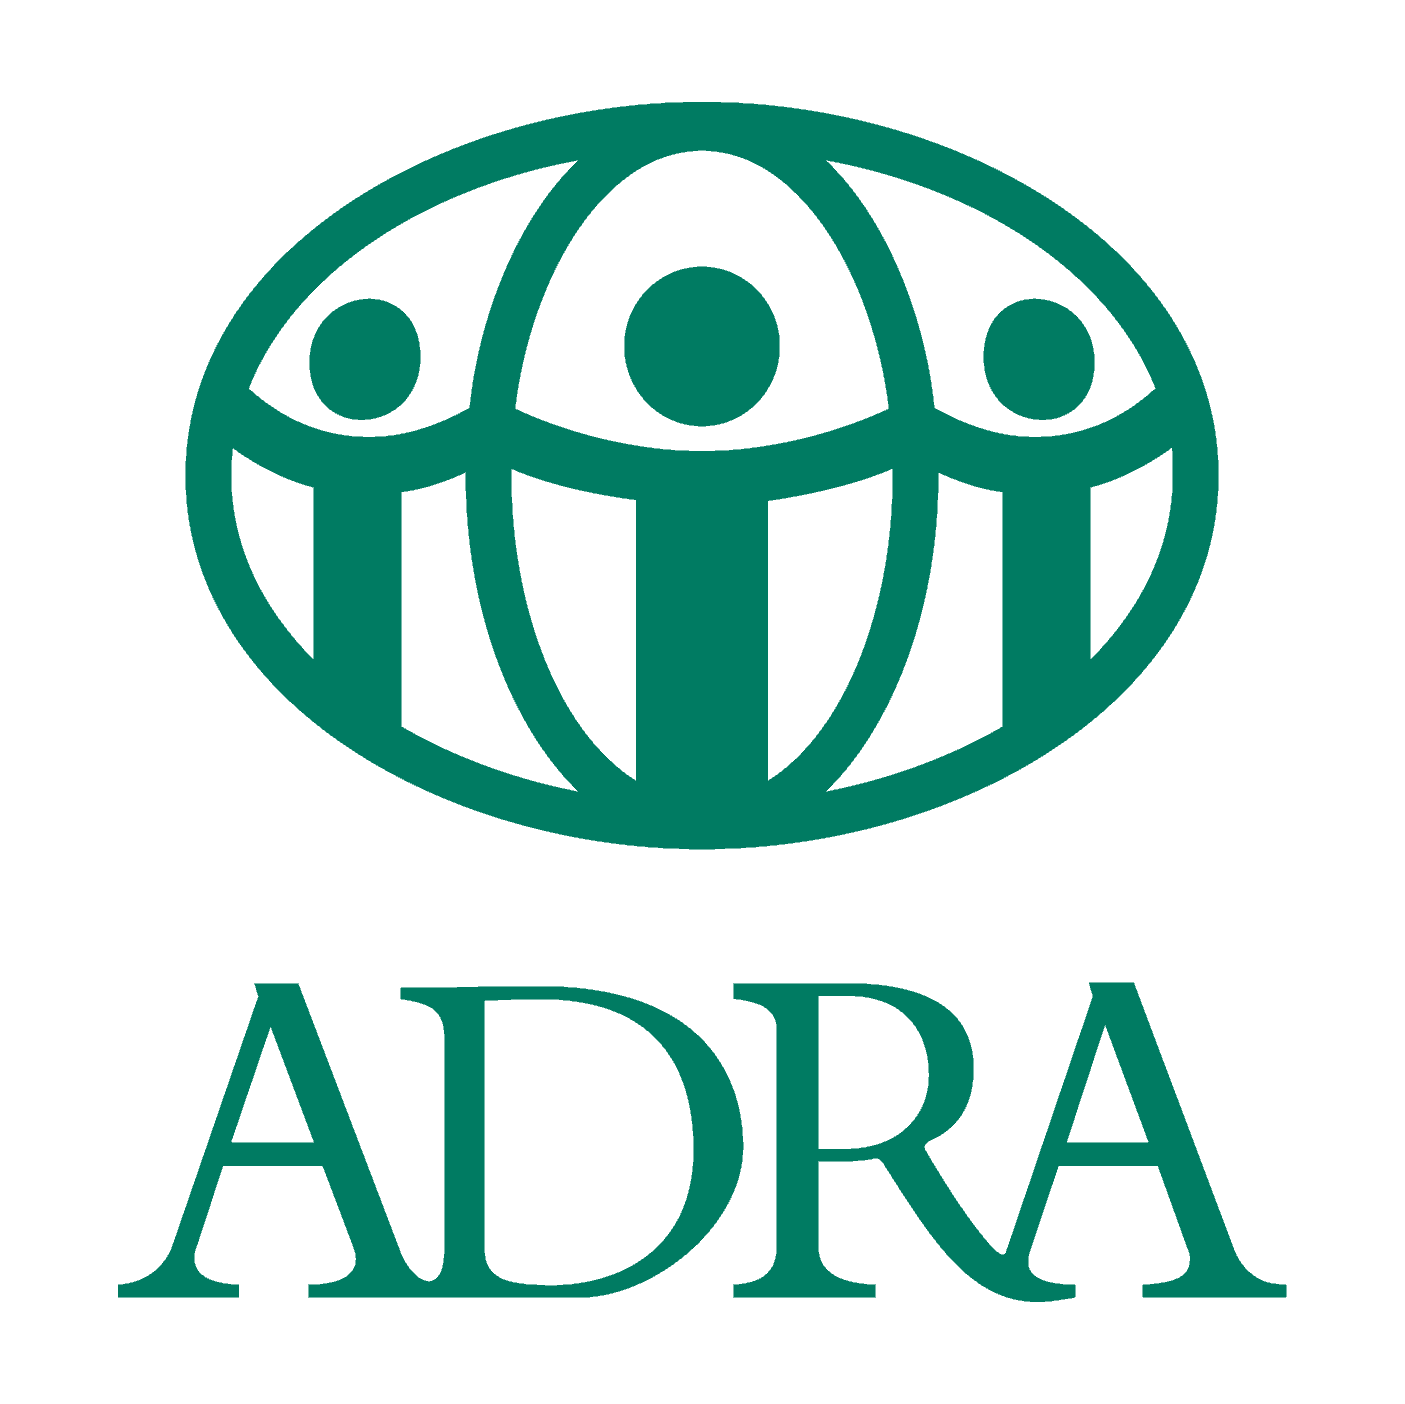 ADRA - Adventist Development & Relief Agency